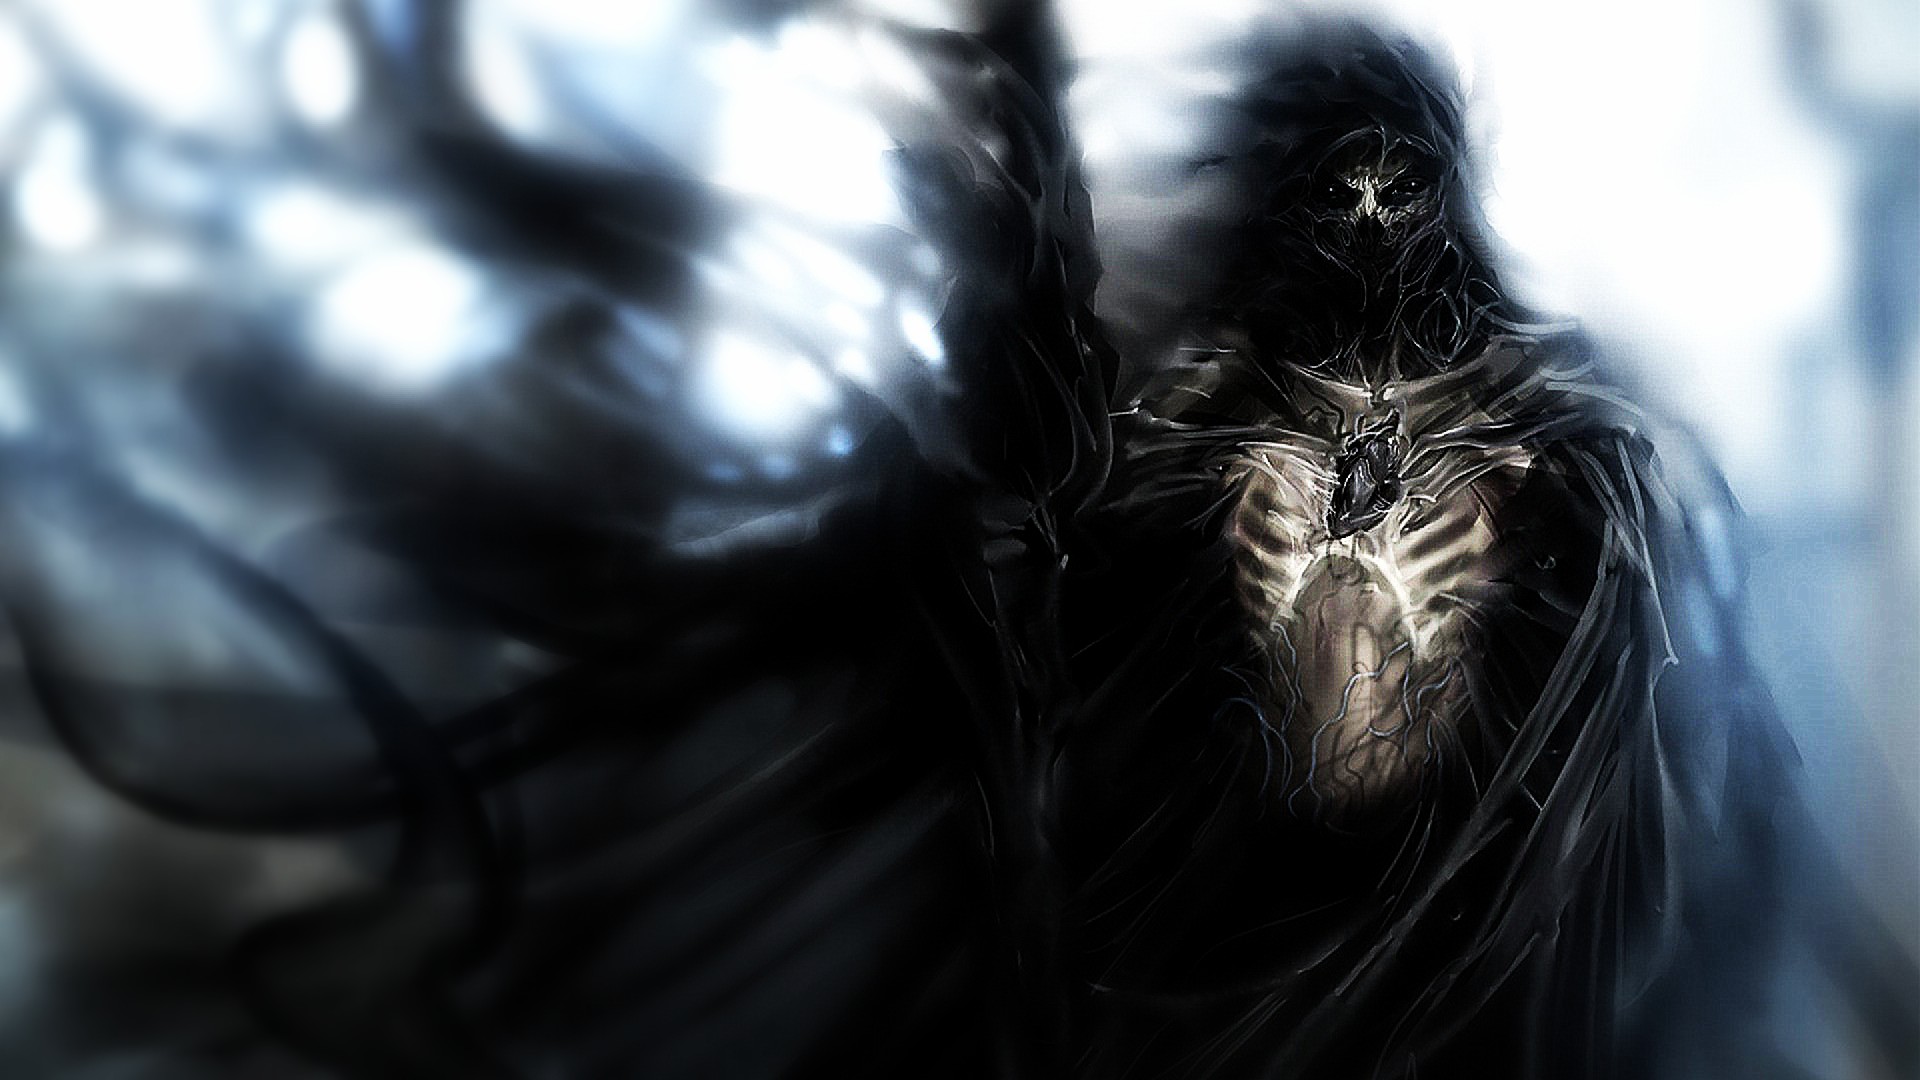 Art Dark Horror Evil Knight Reaper Death Gothic Wallpaper Background